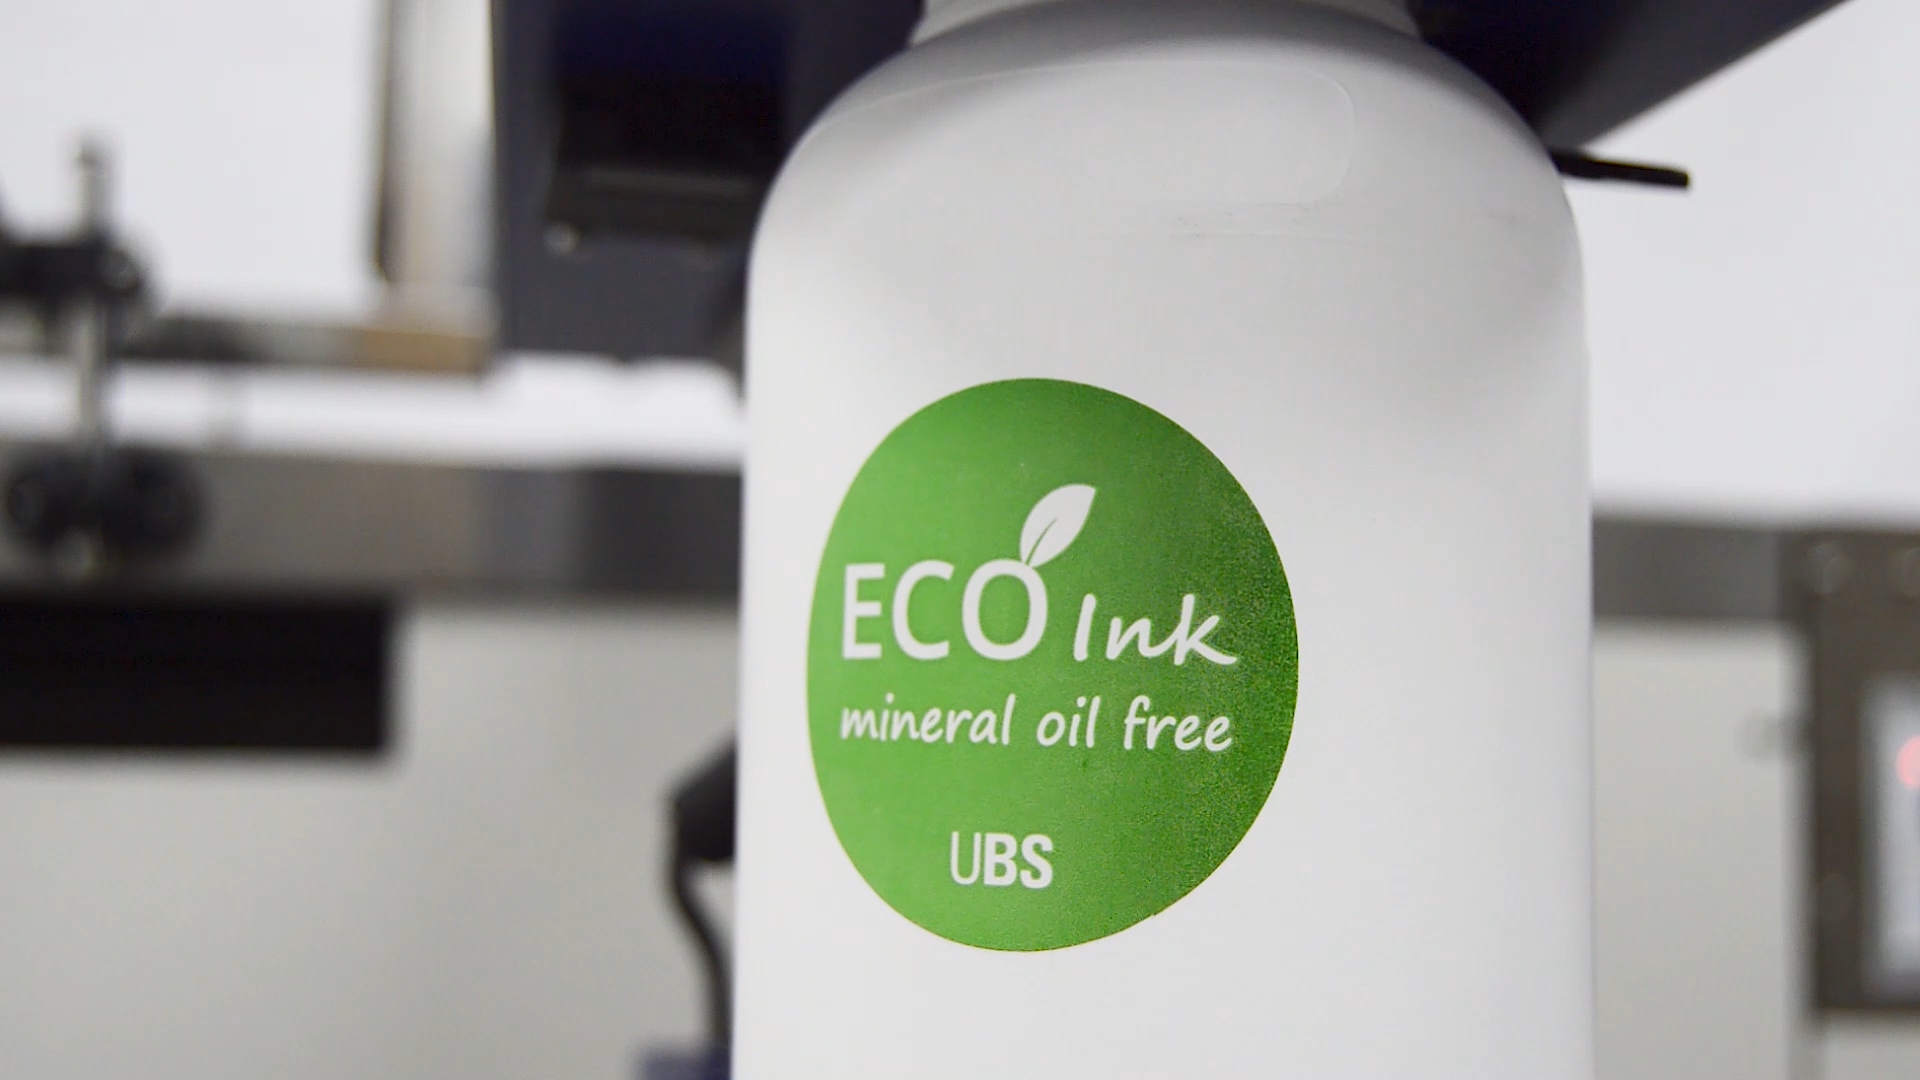 eco-oil-based-ink-free-mineral-oils-ubs